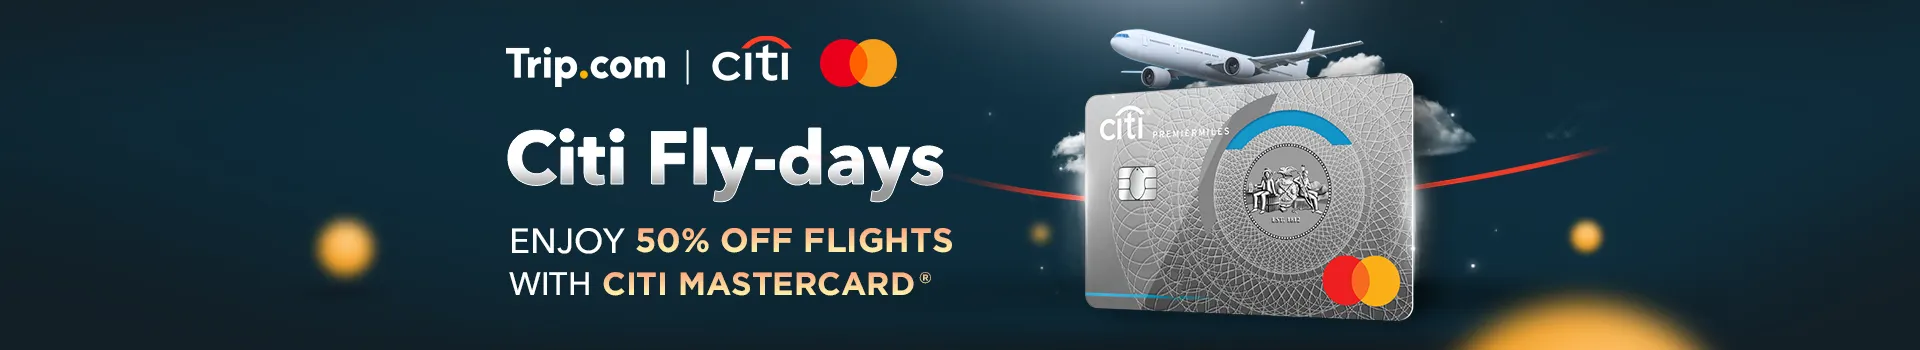 Trip.com Singapore Credit Card Promo Code | Citi Fly Day